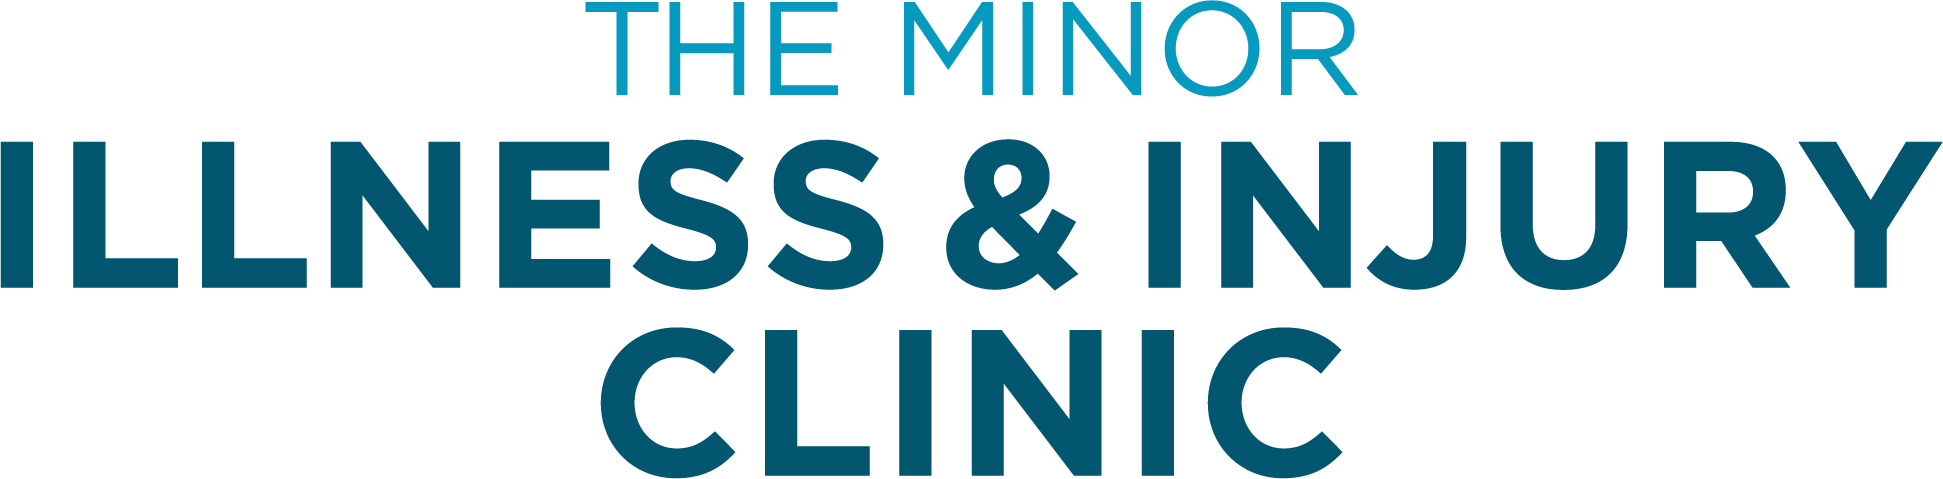 The Minor Illness & Injury Clinic